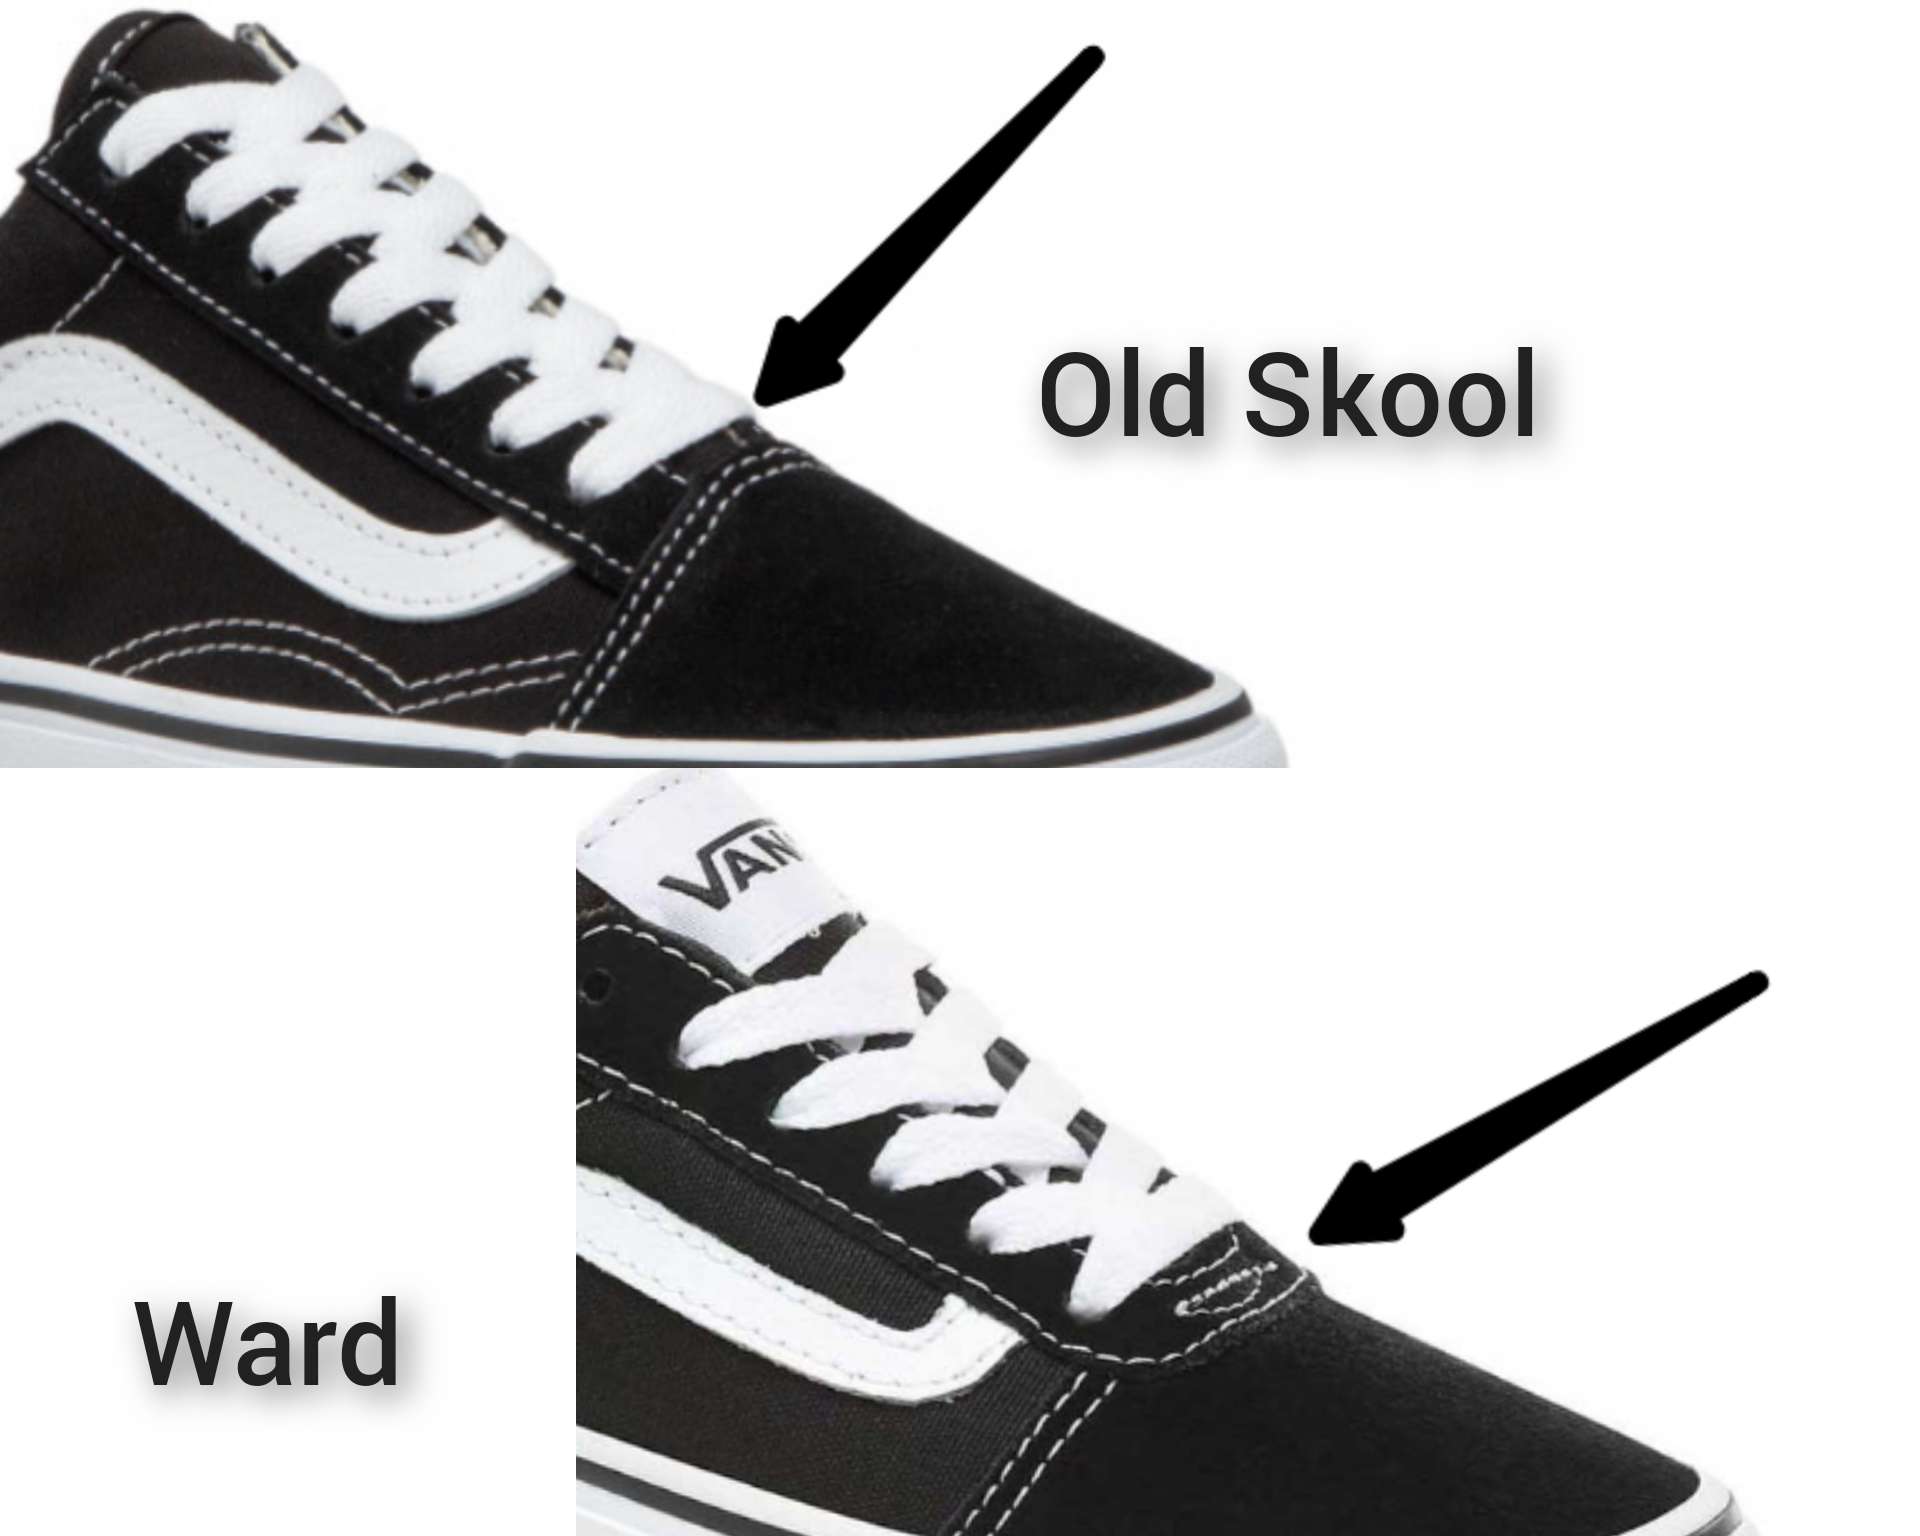 Differences between Vans Old Skool and Vans Ward